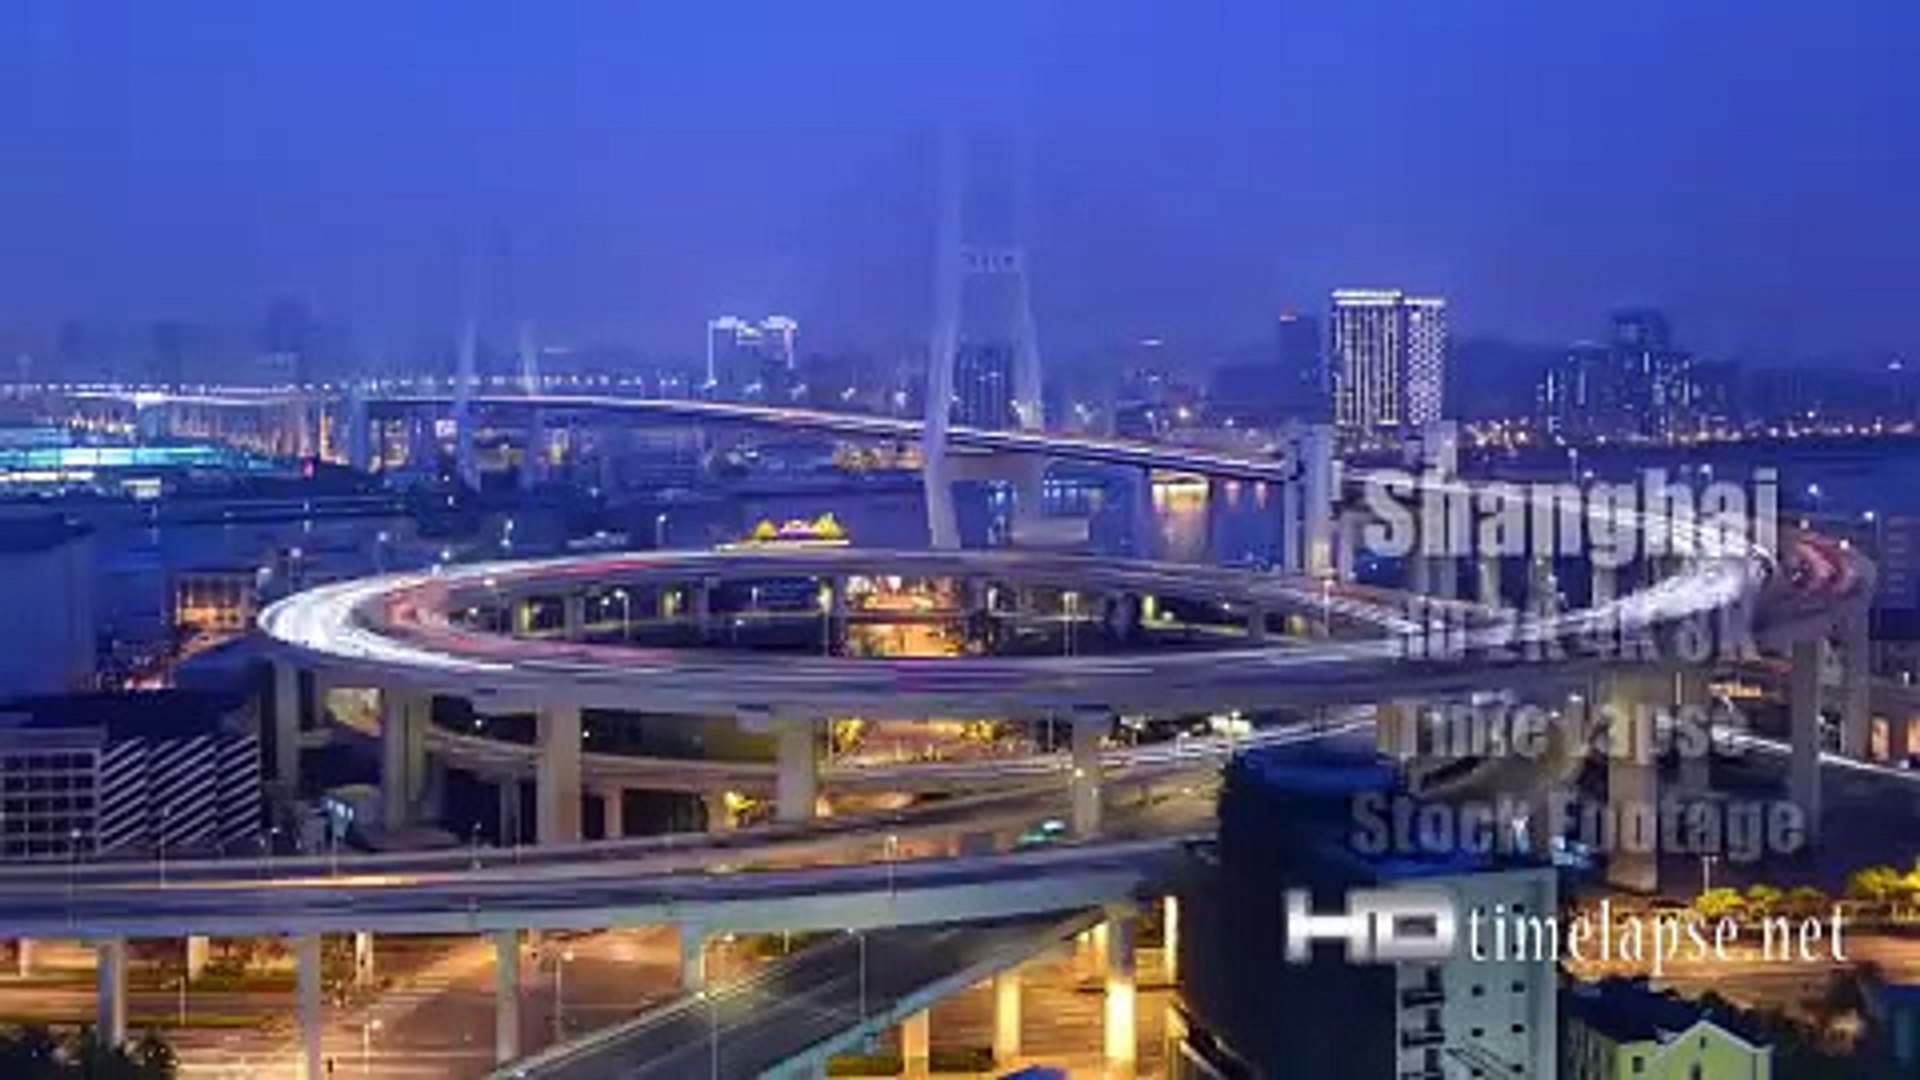 Shanghai, China - UHD Ultra HD 2K 4K 8K Video Time Lapse Stock Footage Royalty-Free